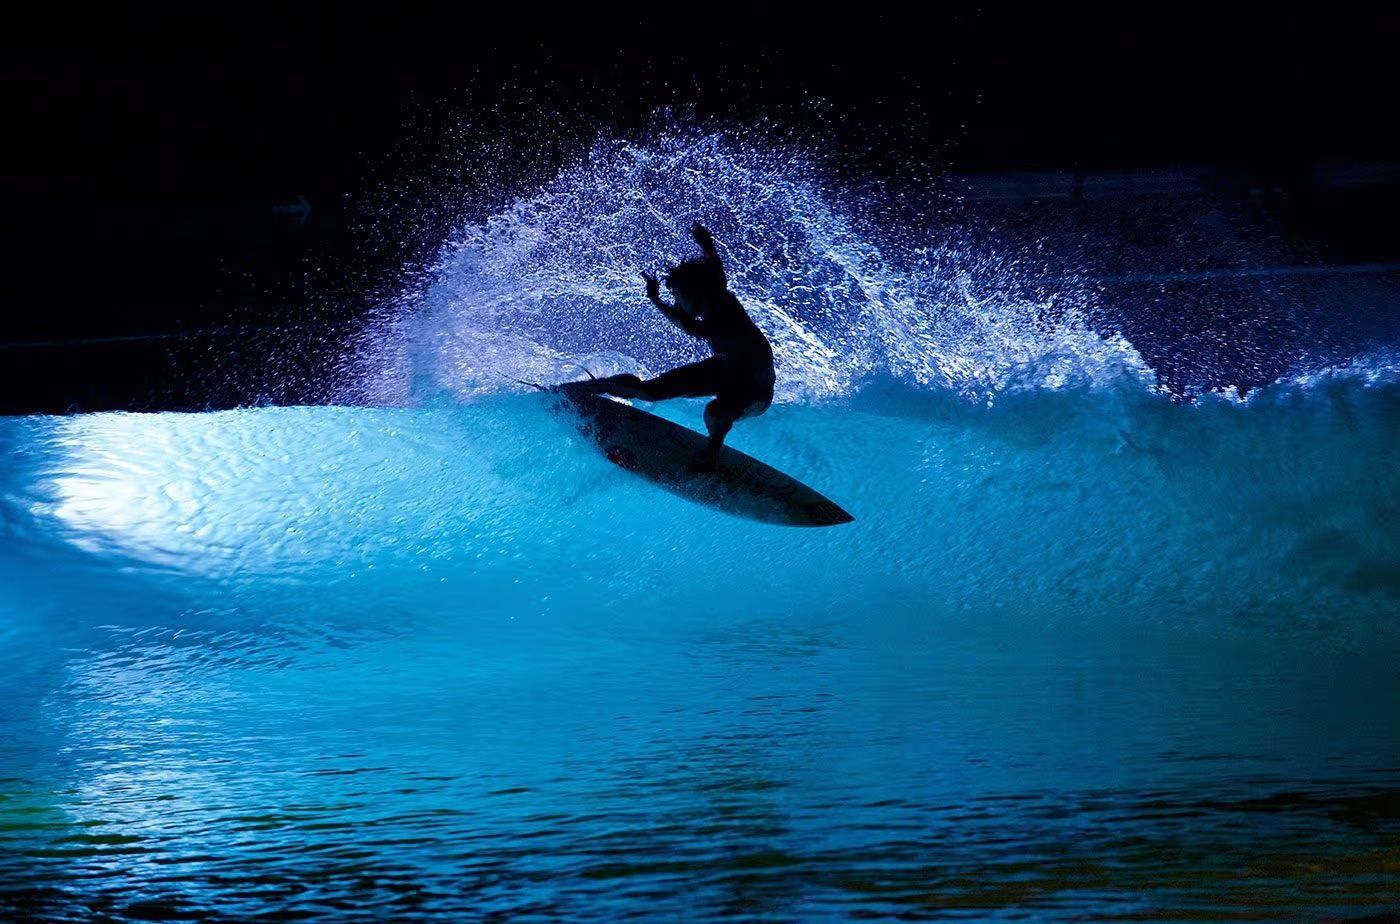  Night Surfing